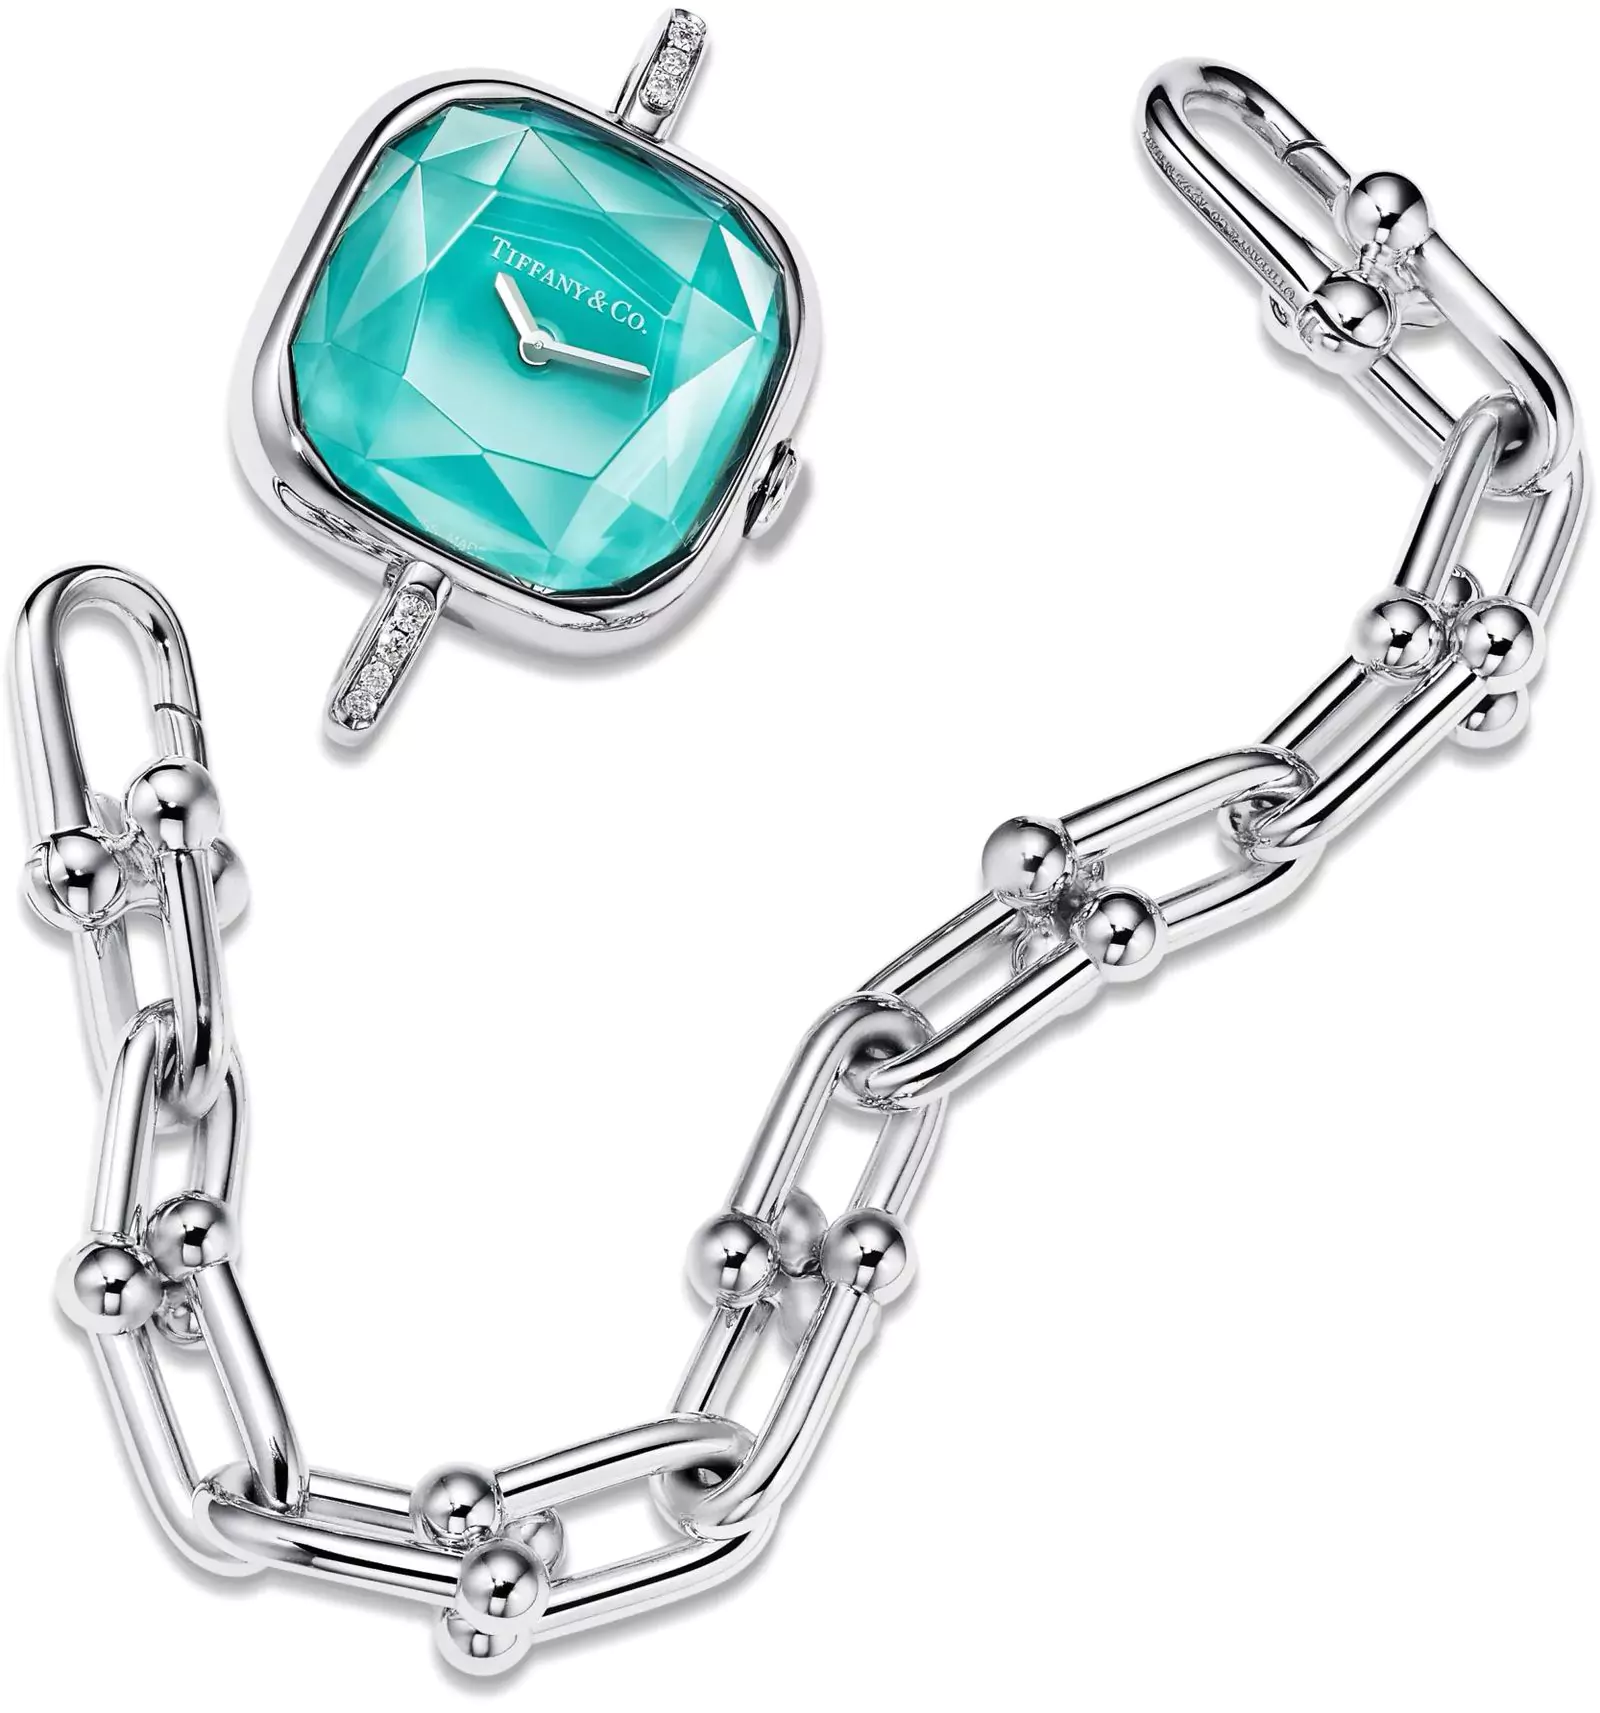 Часы Tiffany HardWear из стерлингового серебра и стали с бриллиантами, циферблат оттенка Tiffany Blue®, фото 2